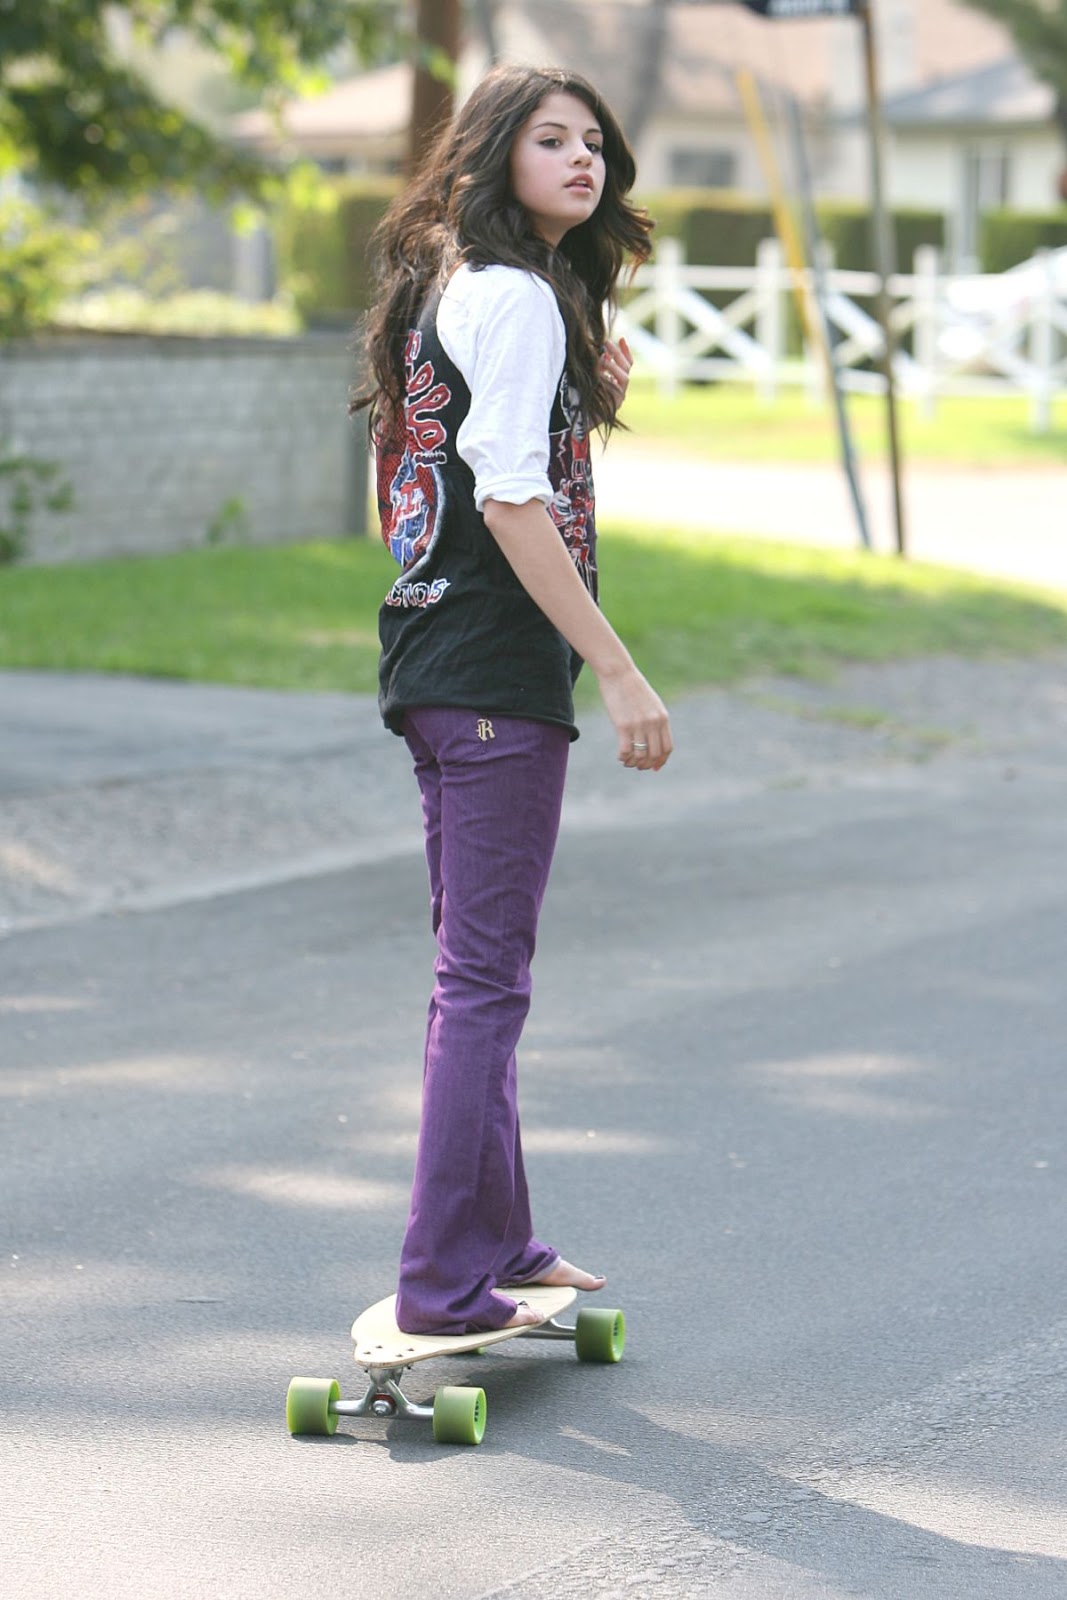 Barefoot Celebrities: Selena Gomez barefoot skating1067 x 1600